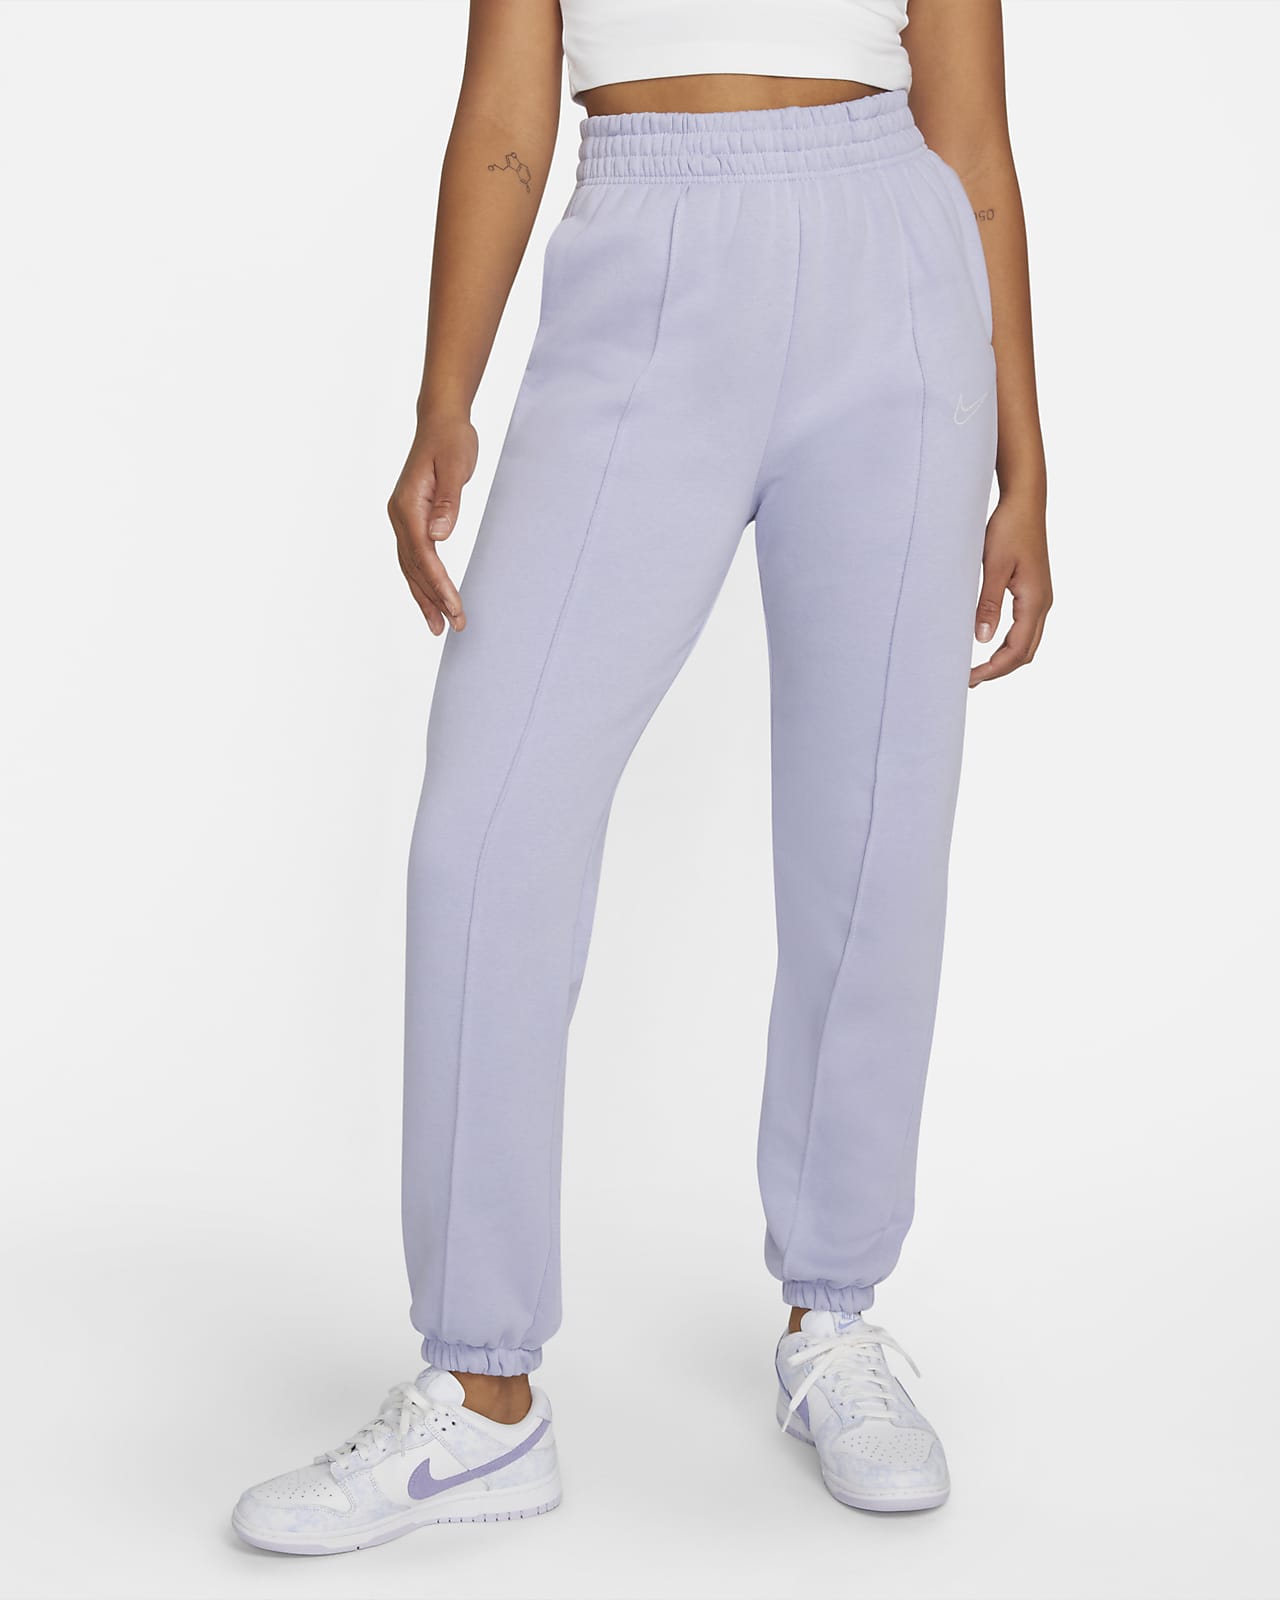 Pantalon en tissu Fleece métallisé Nike Sportswear pour Femme